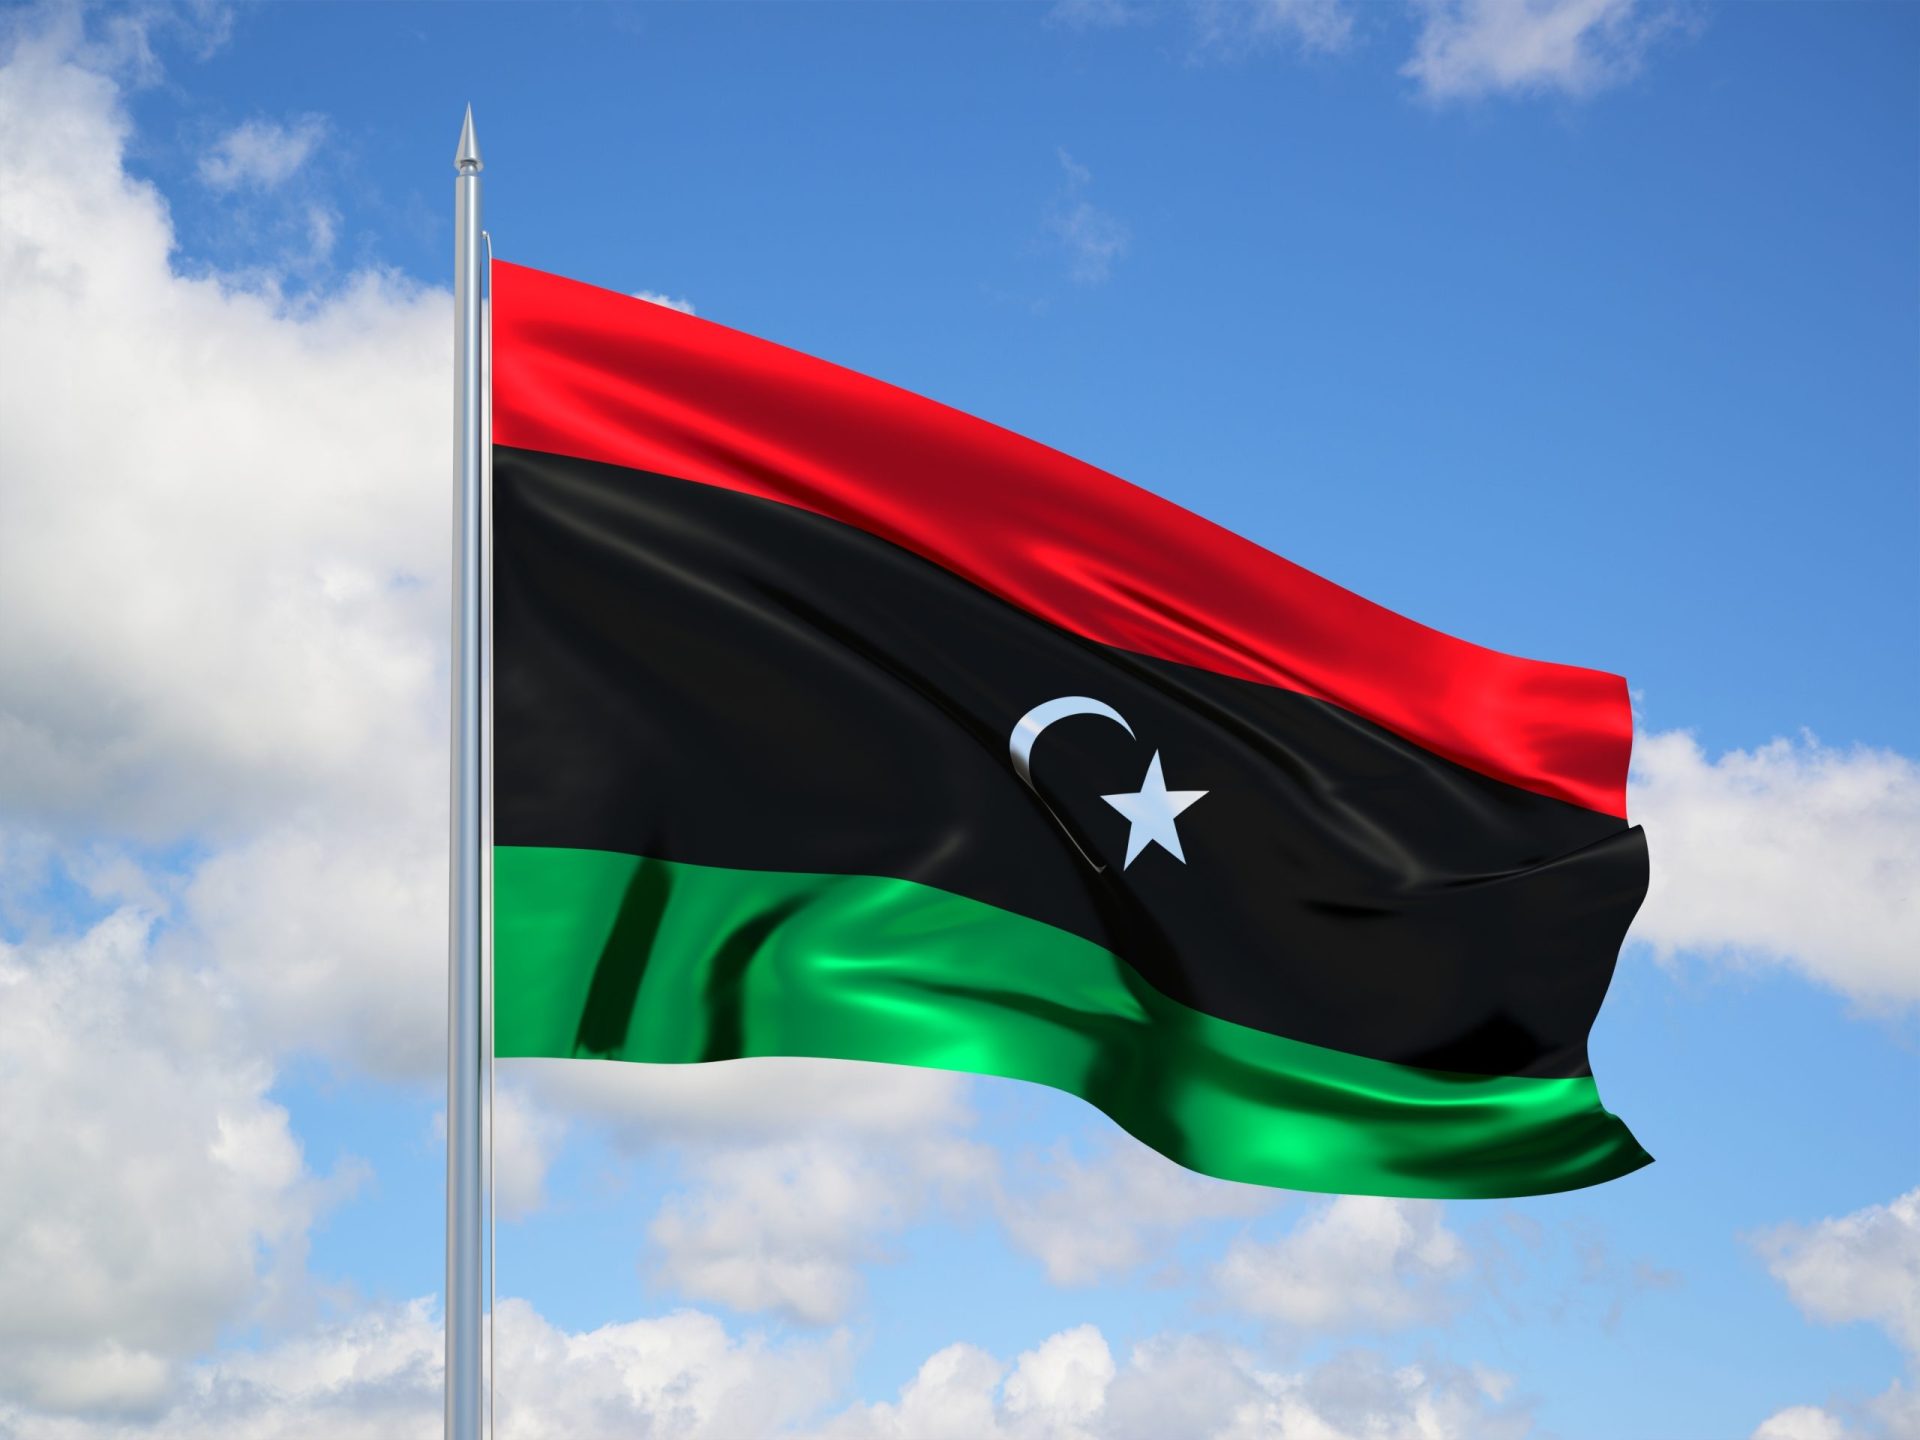 Quatro italianos sequestrados na Líbia